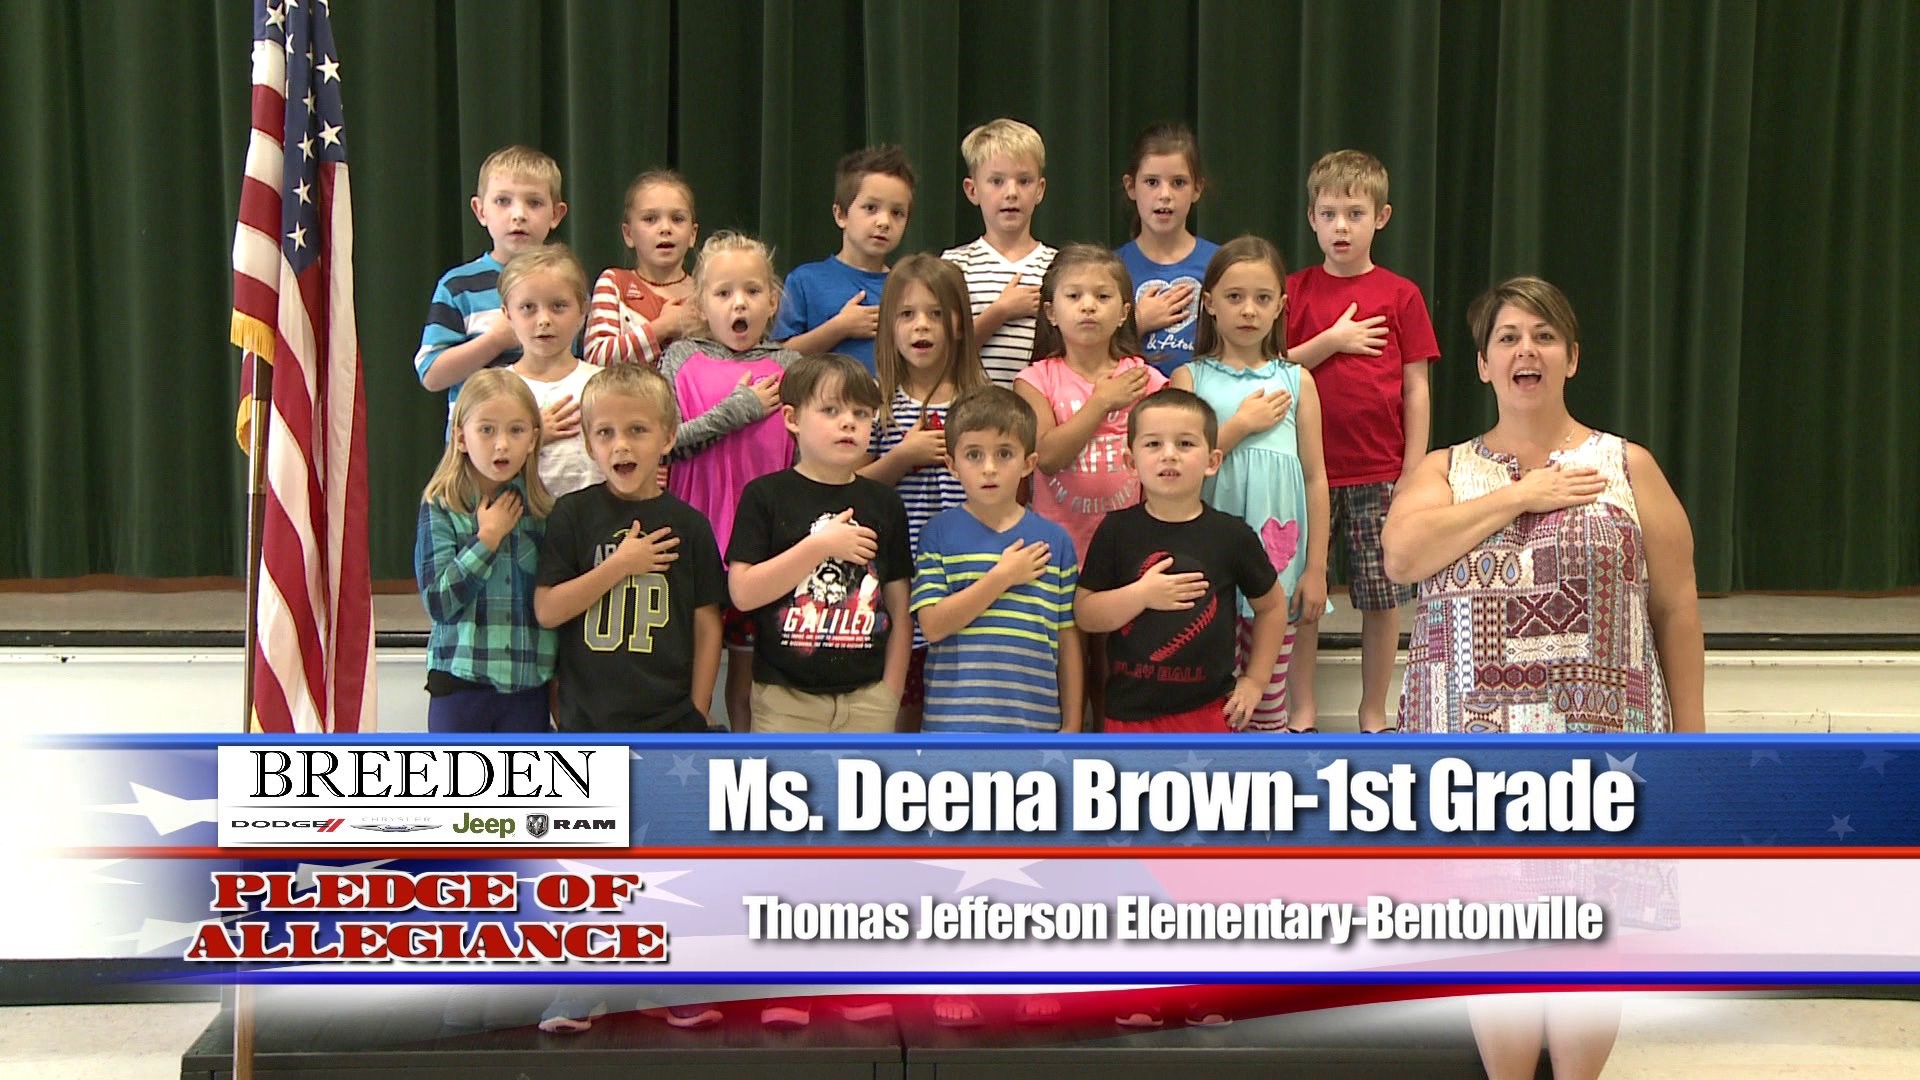 Thomas Jefferson Elementary, Bentonville - Ms. Deena Brown - 1st Grade